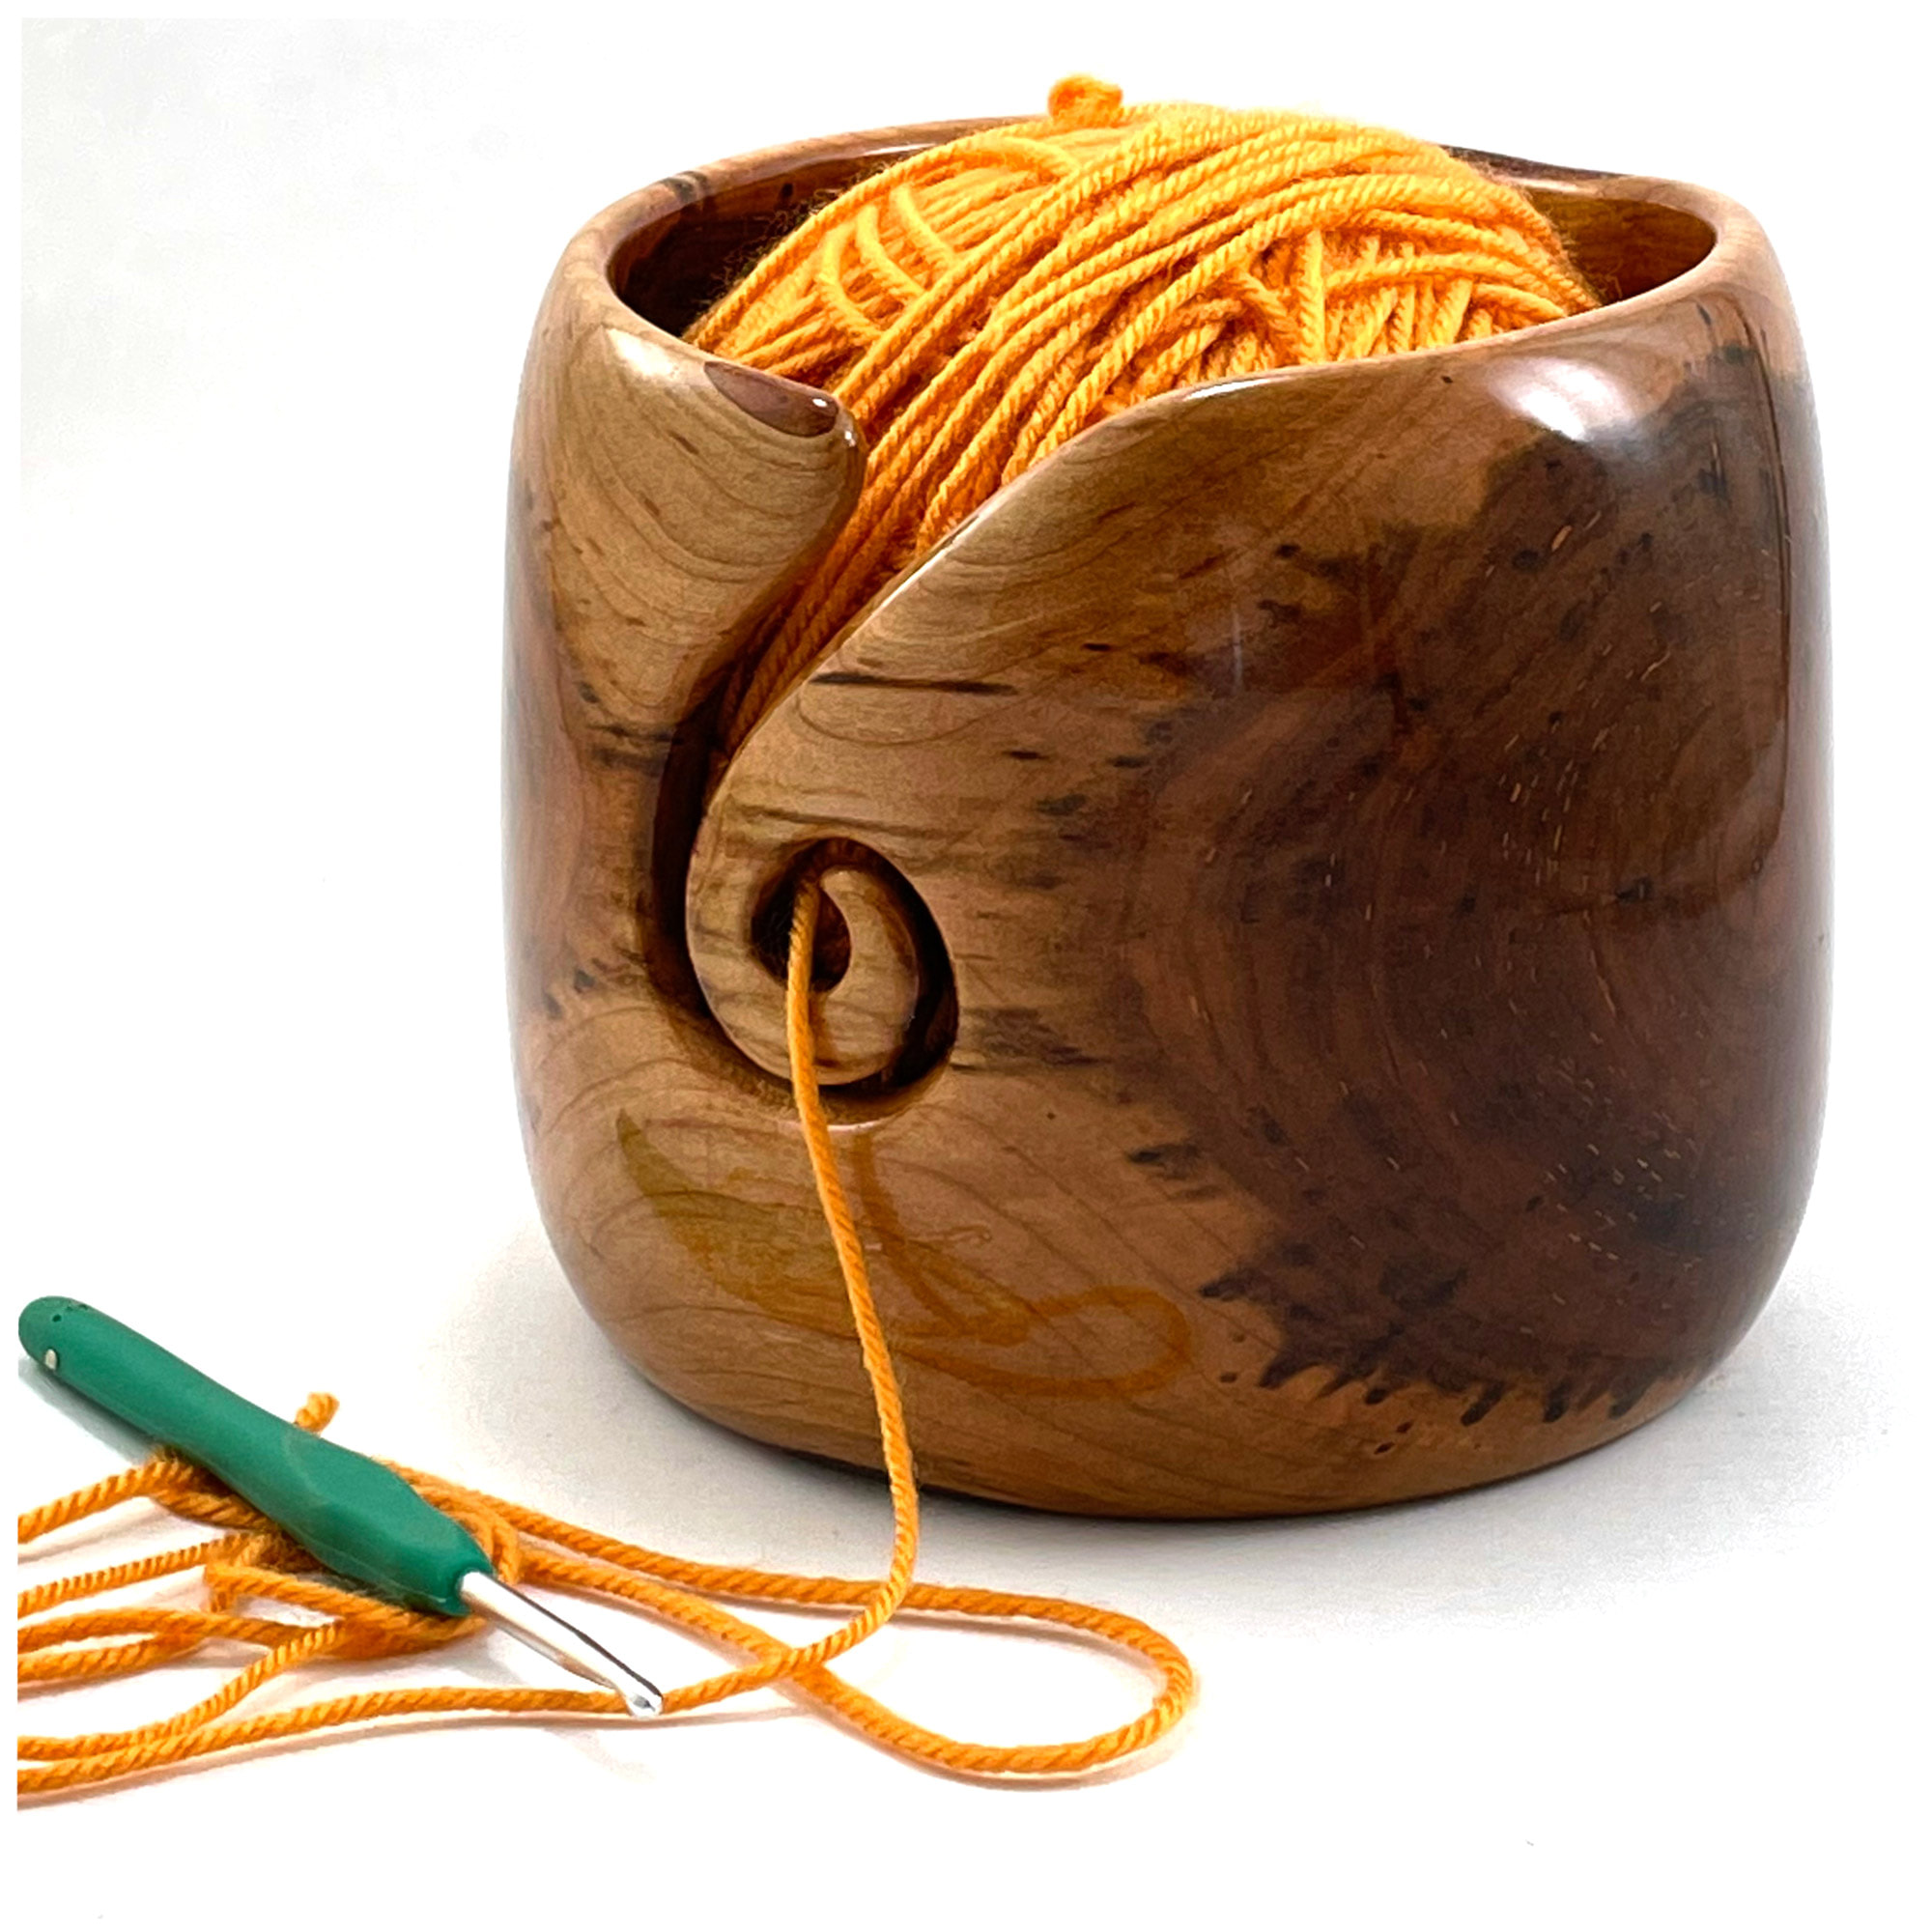 travel yarn bowl